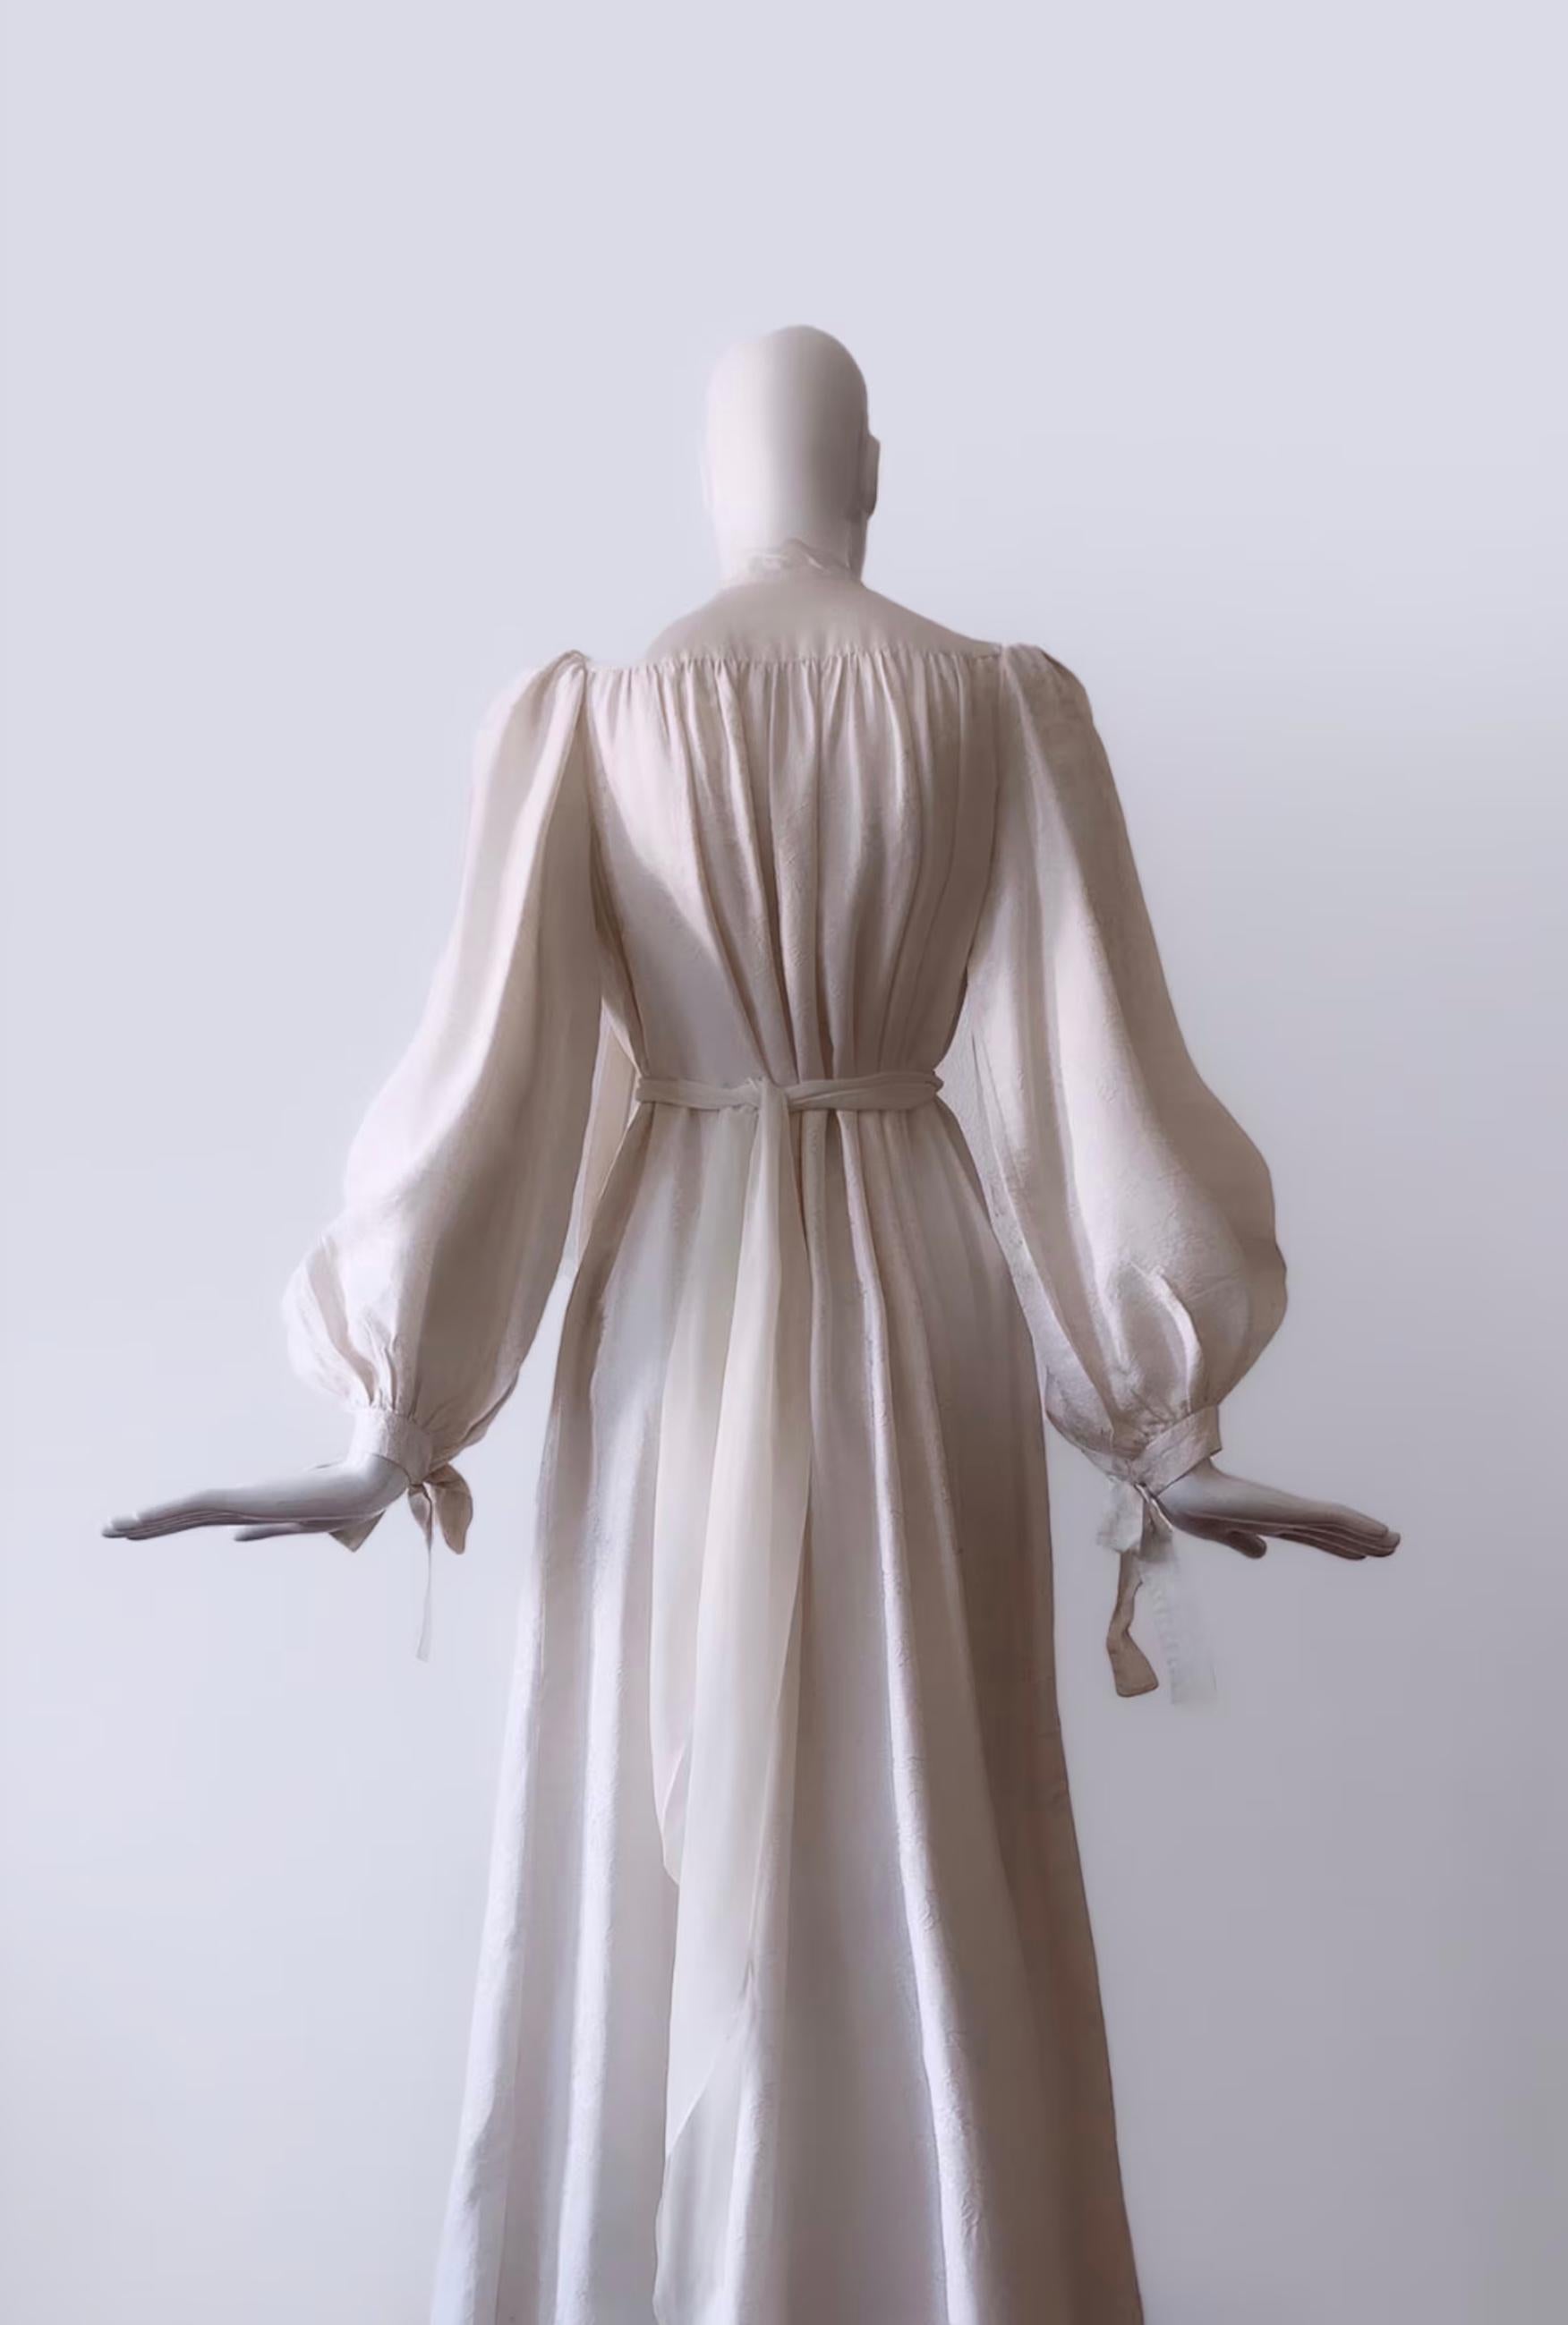 Gray Stunning Original 1970s Jean-Louis Scherrer Dress Silk Poet Sleeve Bow Maxi 70s  For Sale